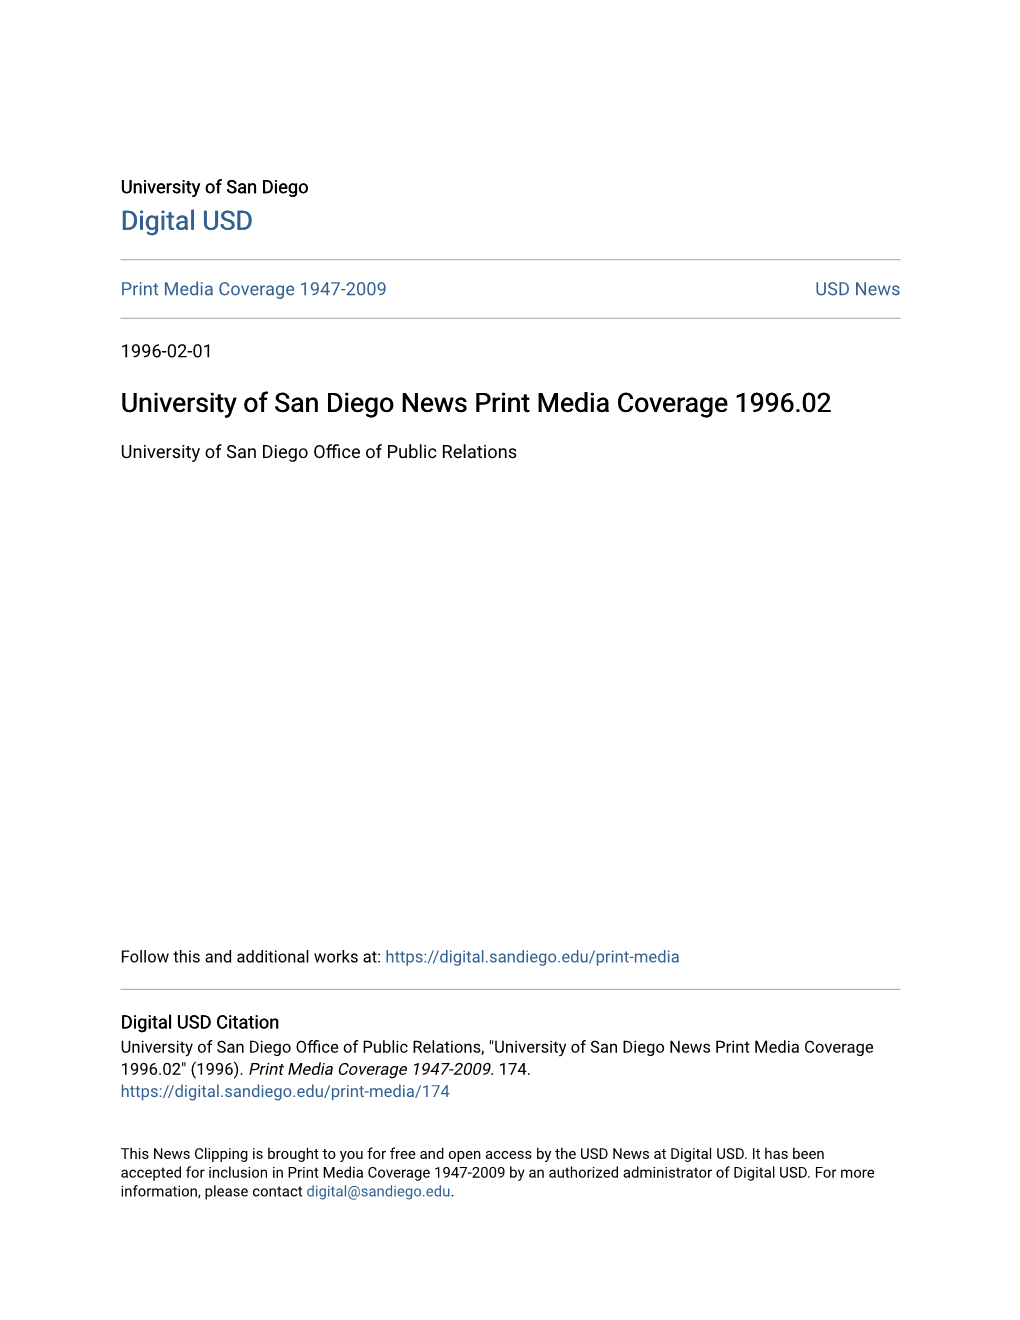 University of San Diego News Print Media Coverage 1996.02